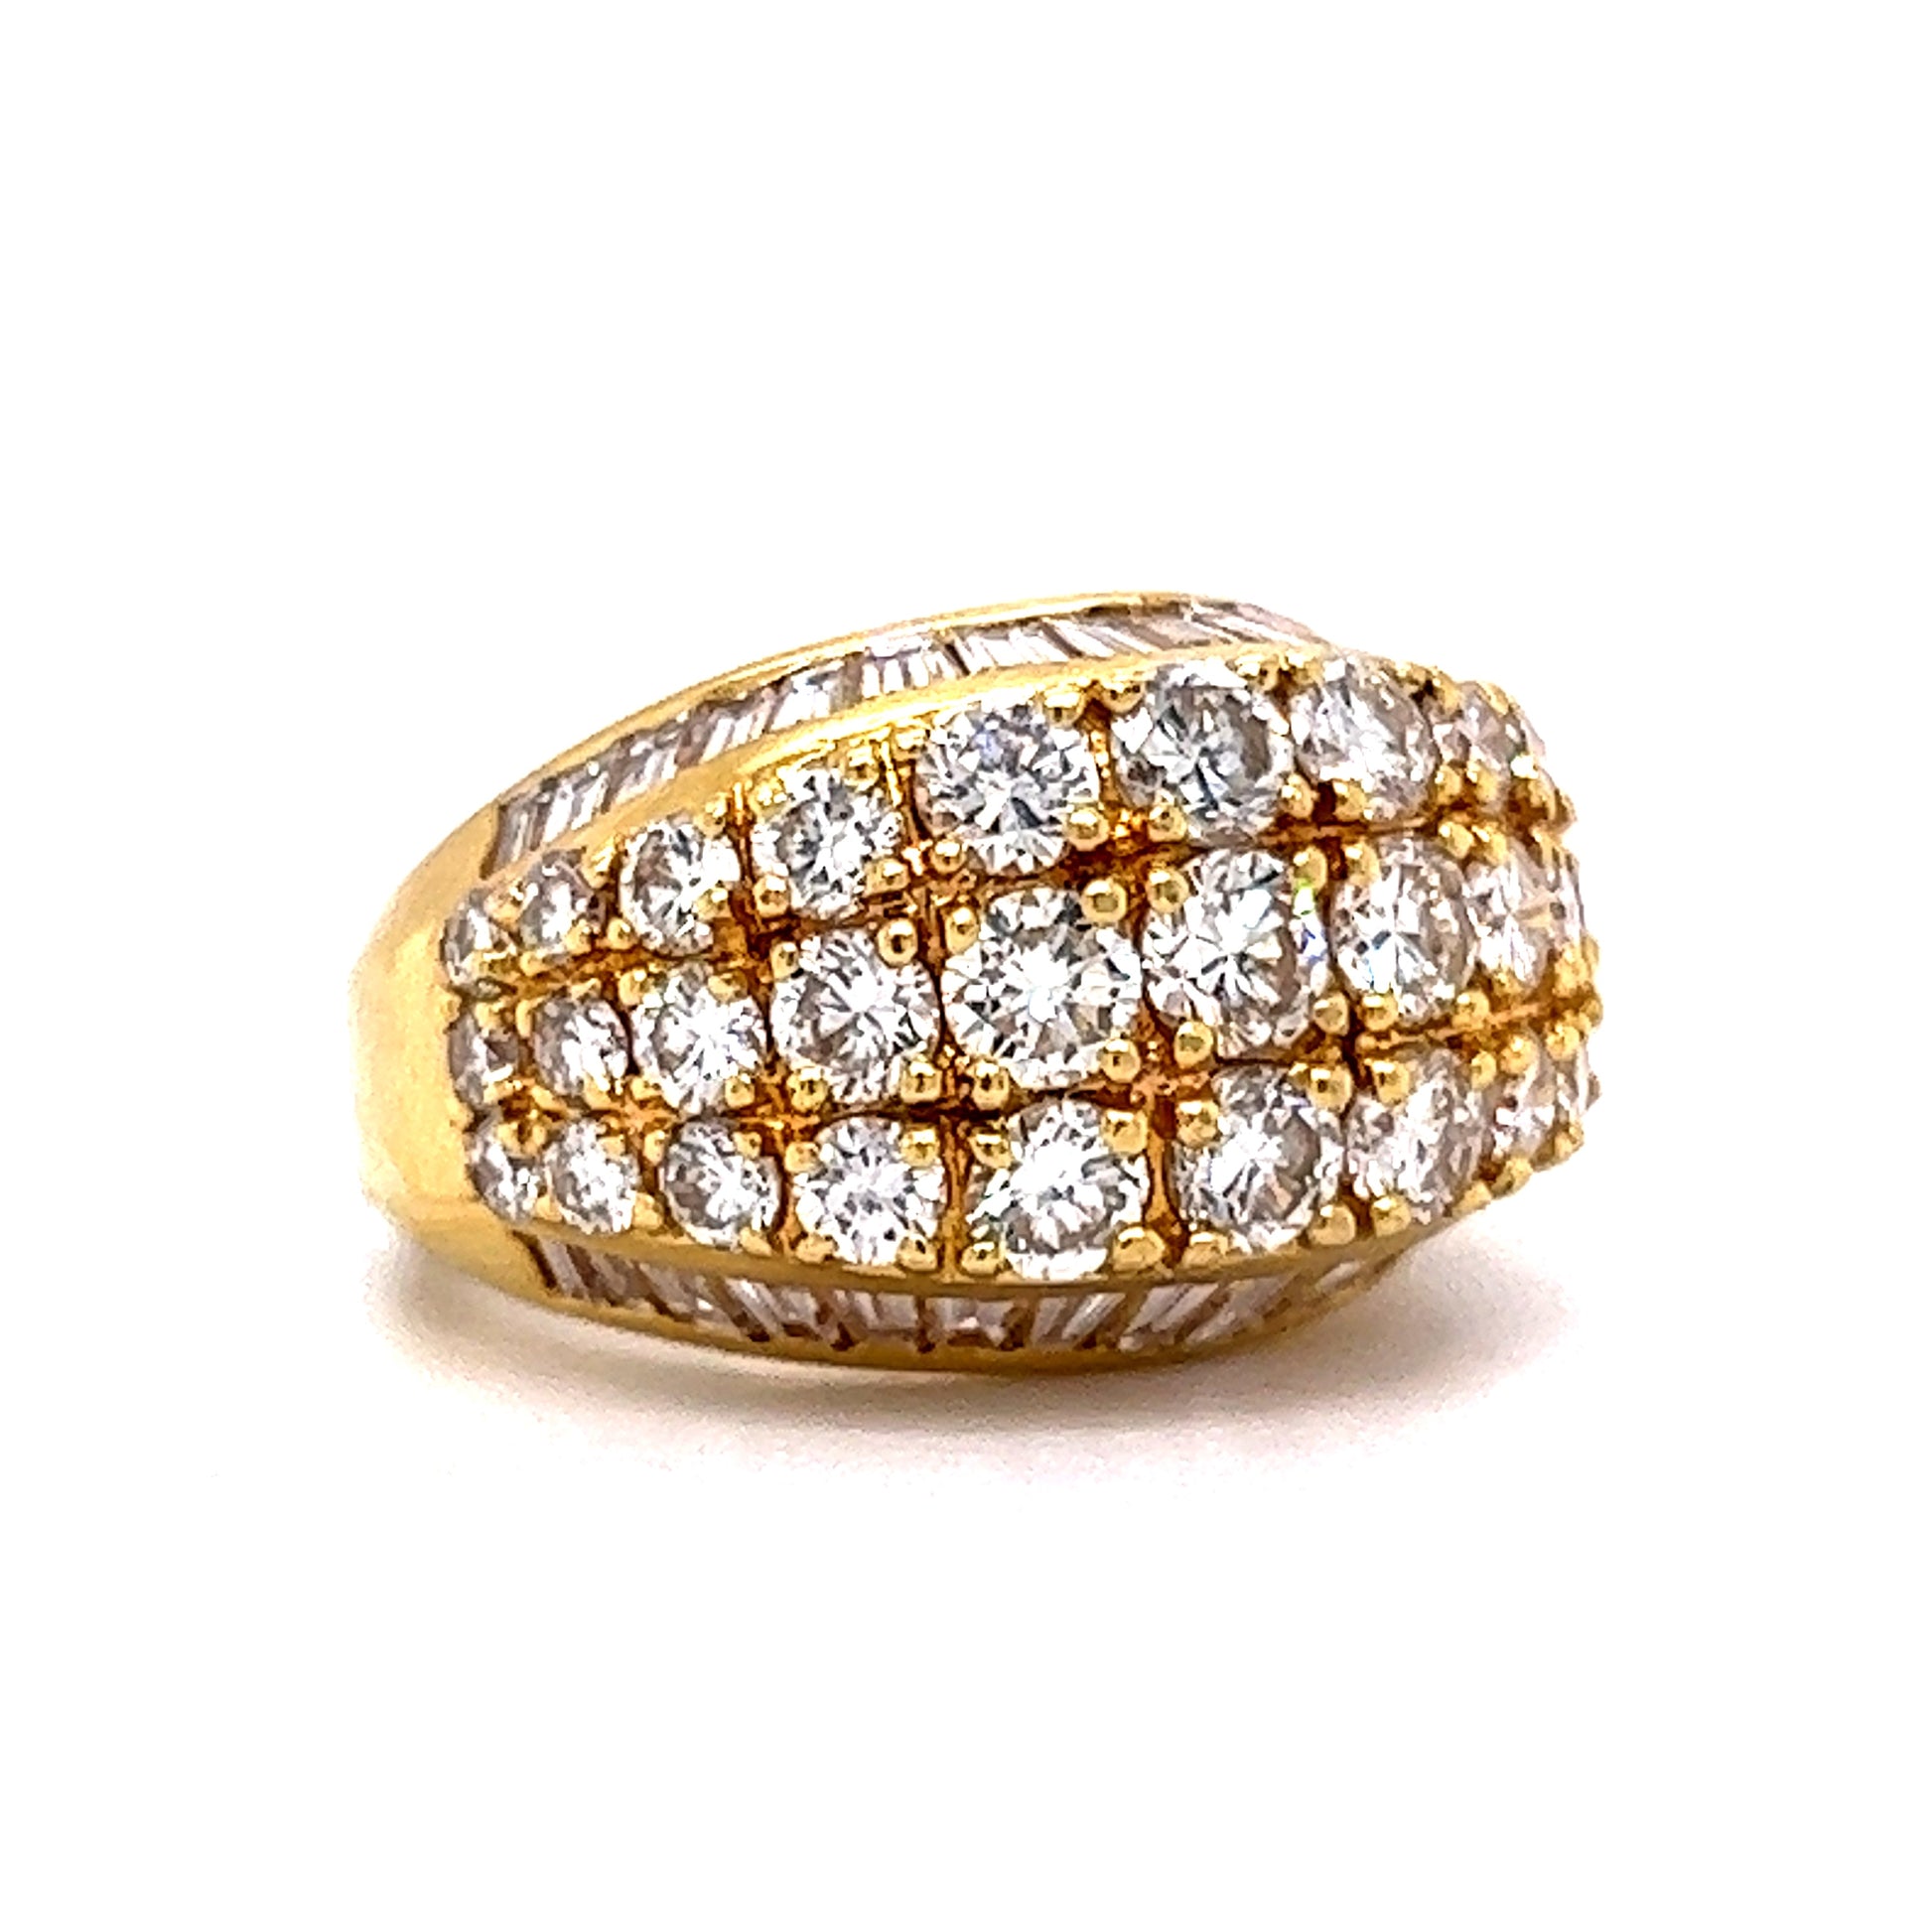 7 Carat Diamond Cocktail Ring 18k Yellow Gold